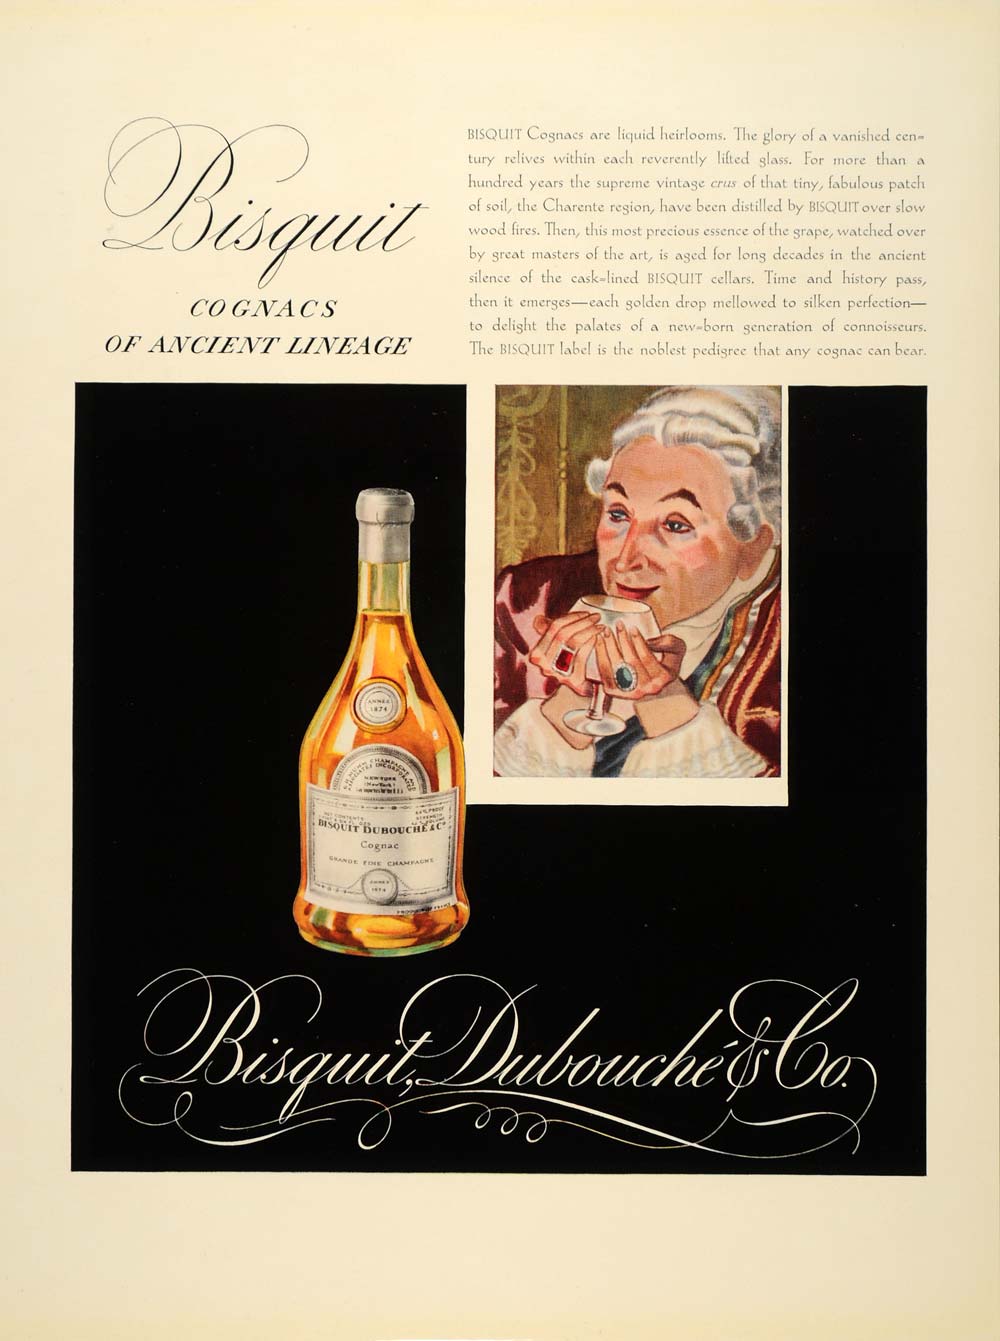 1934 Ad Bisquit Bubouche Cognac Alcohol Liquor Charente - ORIGINAL FTT9